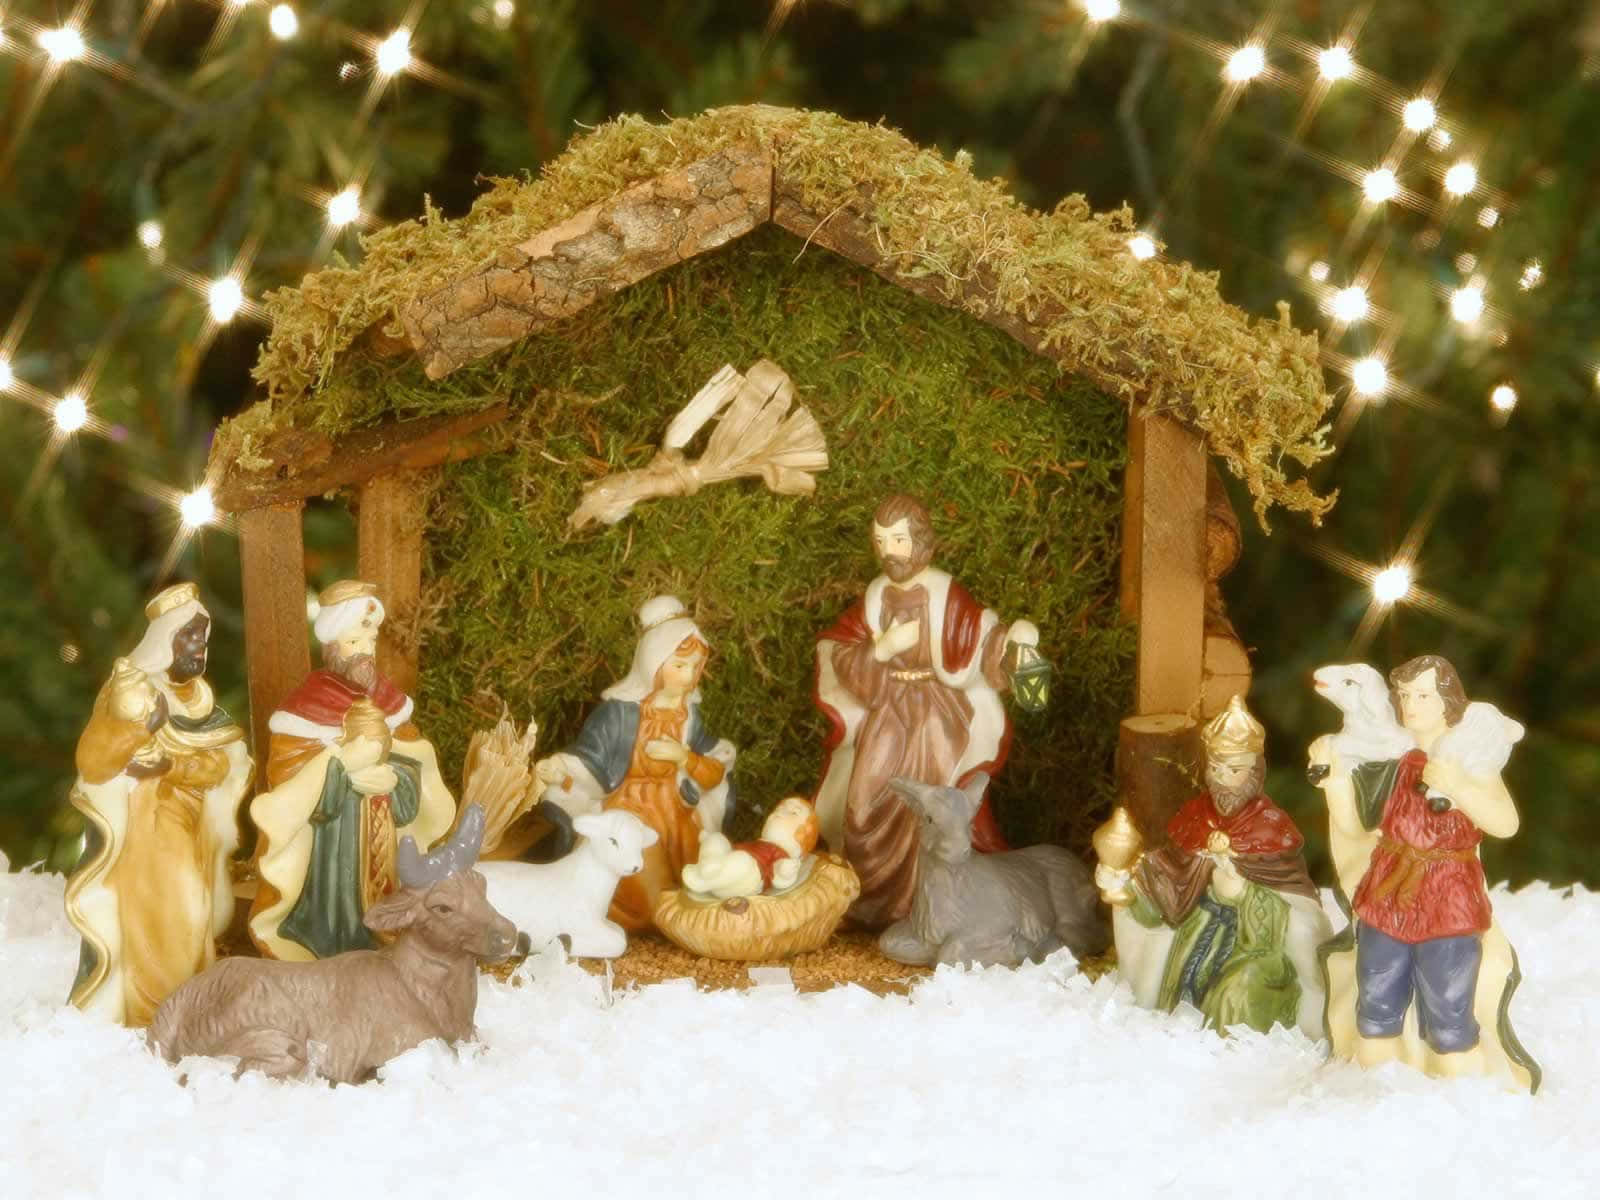 “Adoring the Nativity Scene”